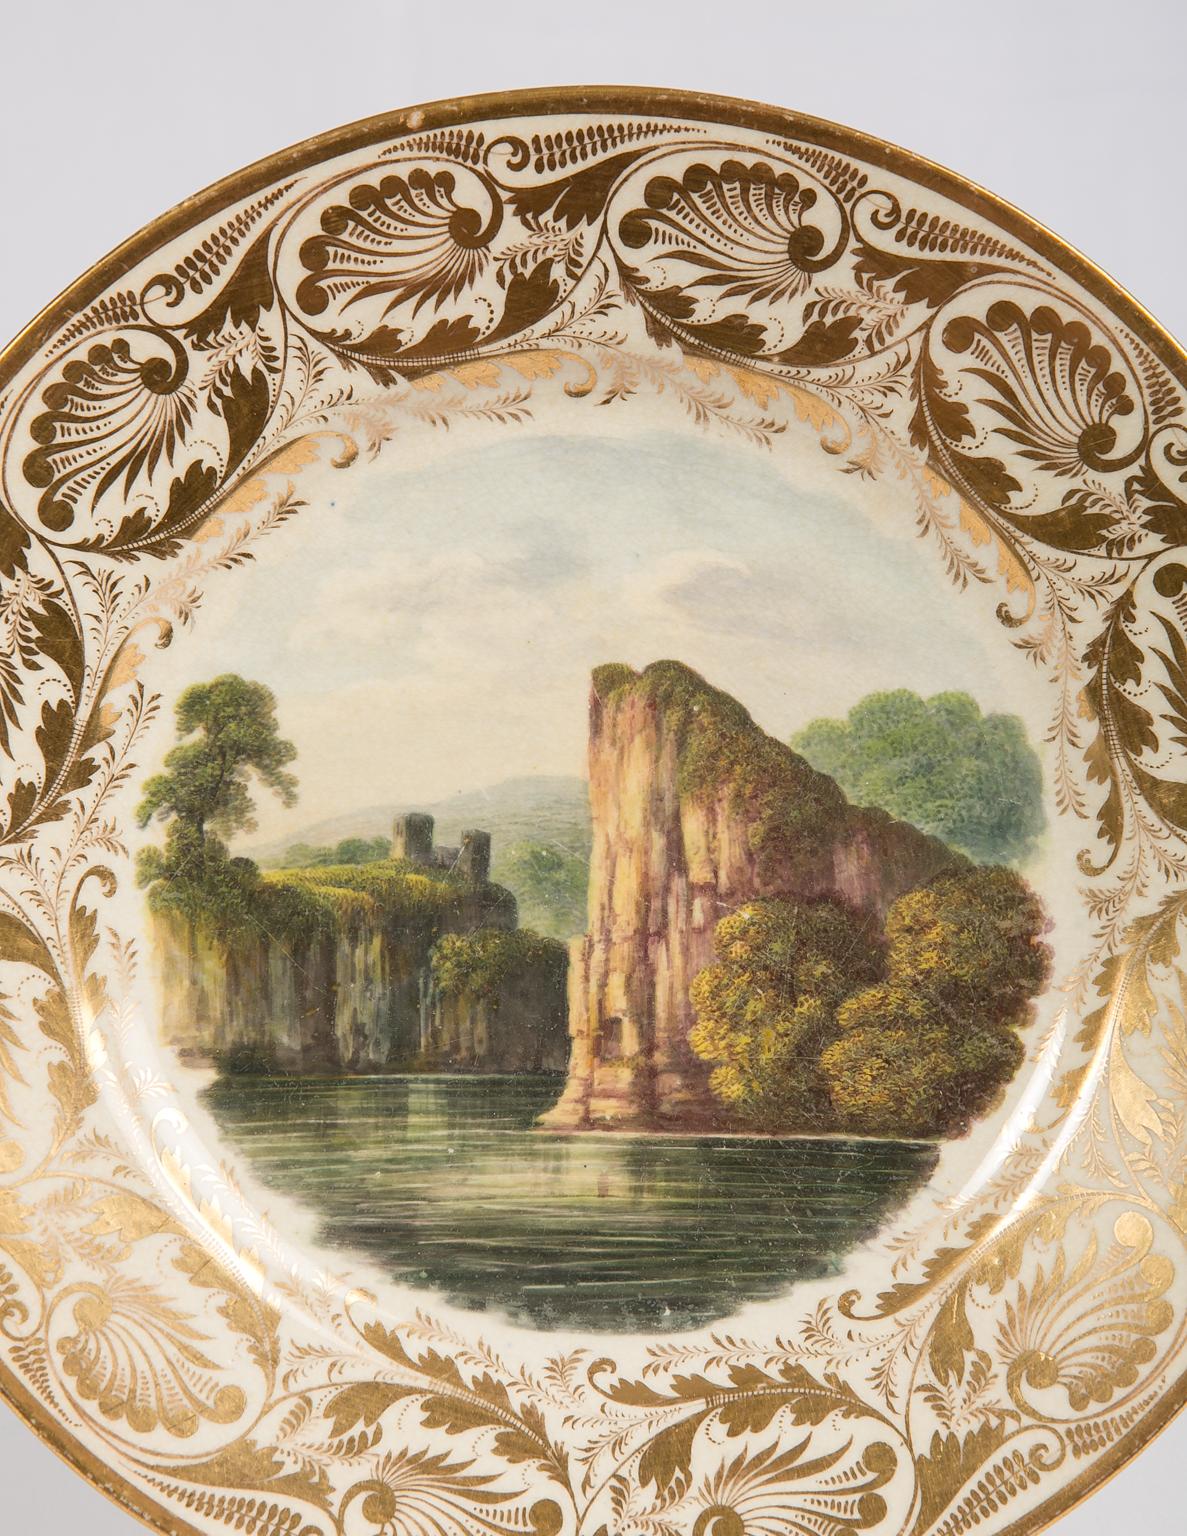 Antique Porcelain Dishes with Hand-Painted Landscape Scenes 2